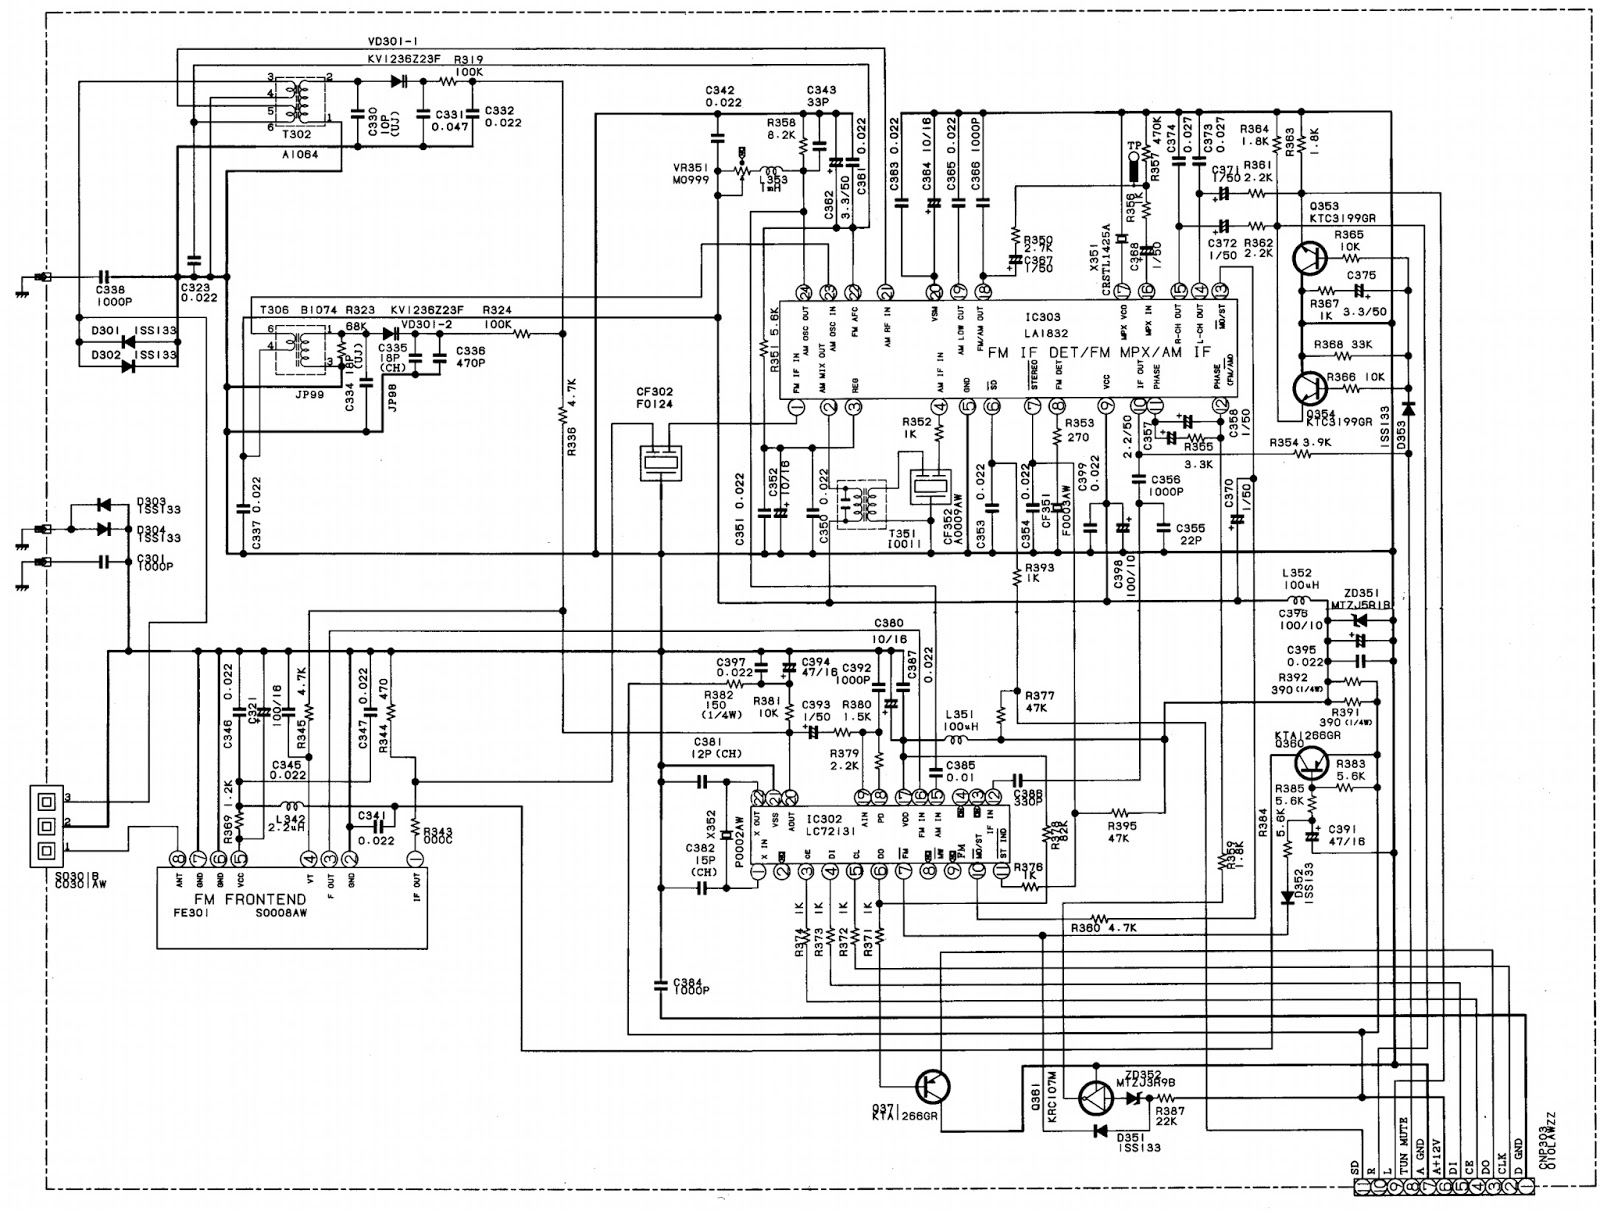 SHARP CD C-470 - SCHEMATIC [Circuit Diagram] - STK4881 (Power) – LA1832